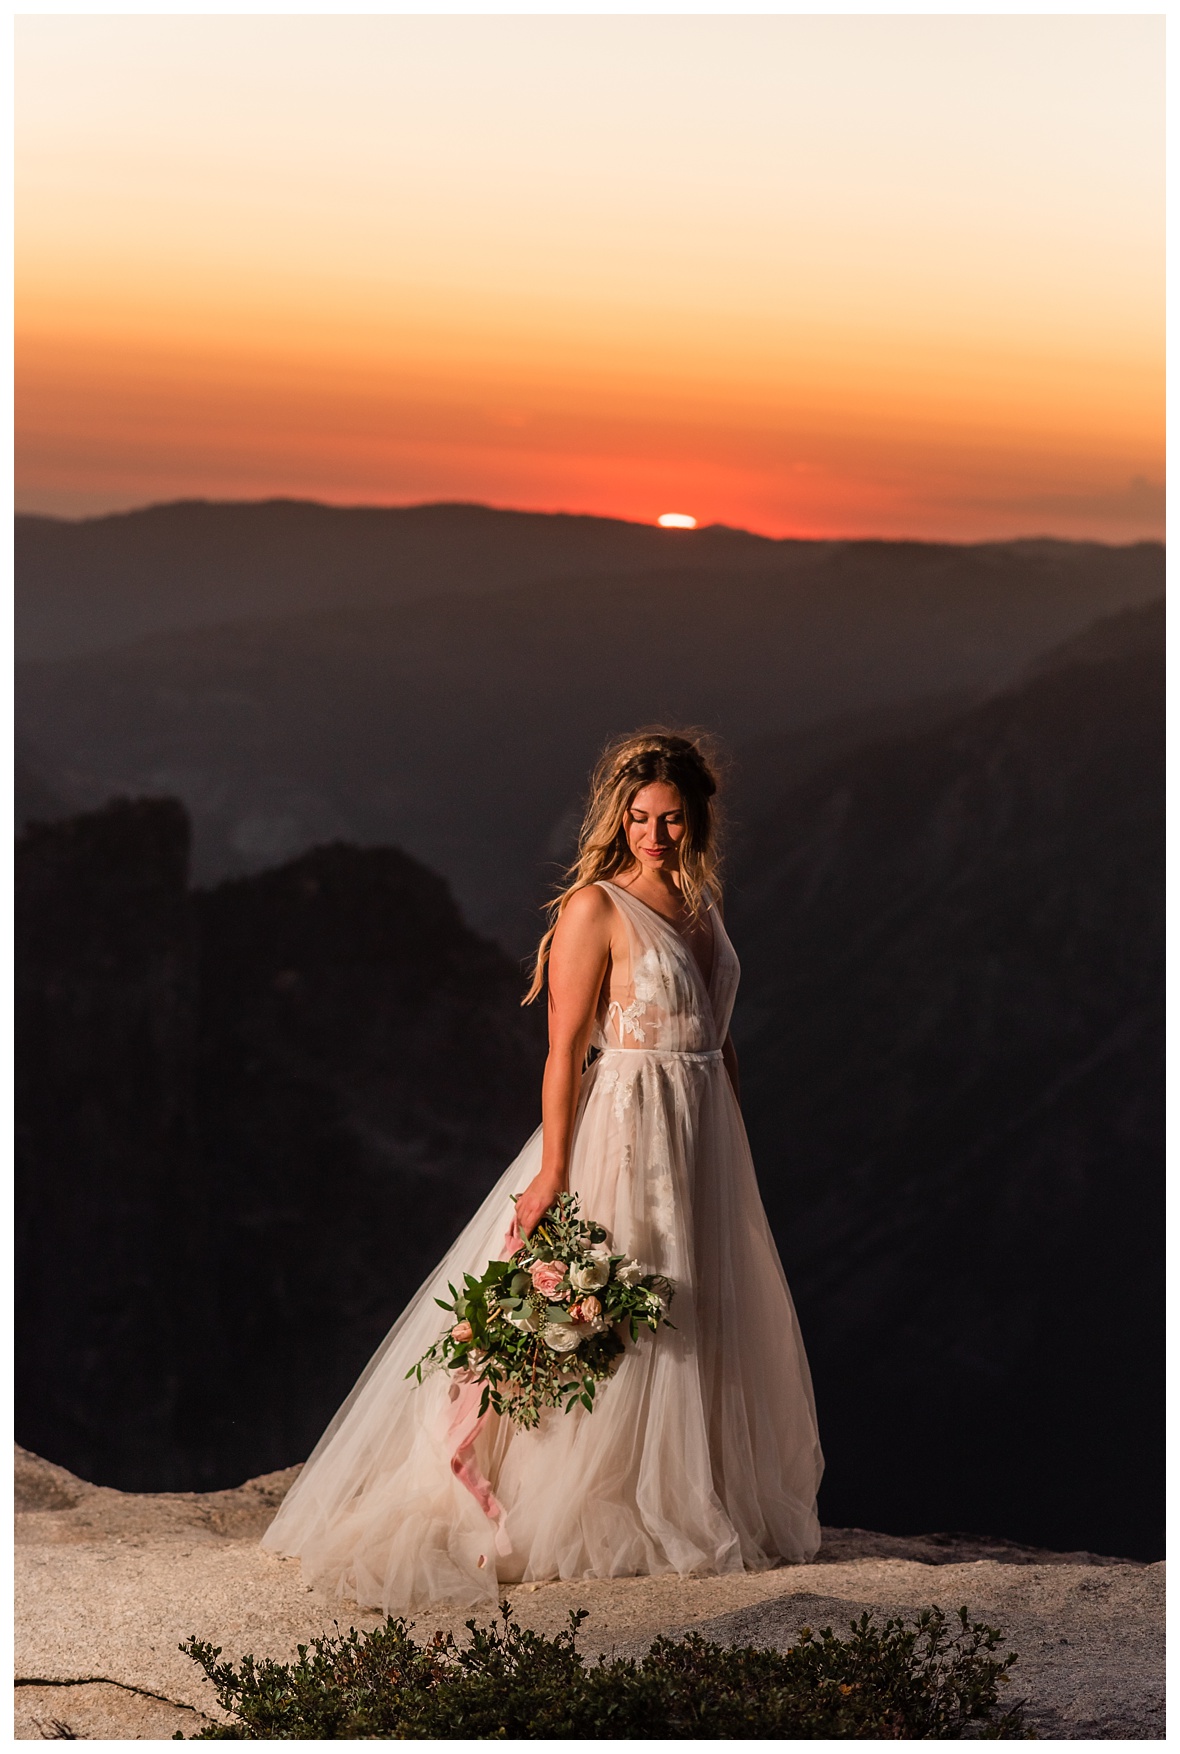 Boho bride at sunset